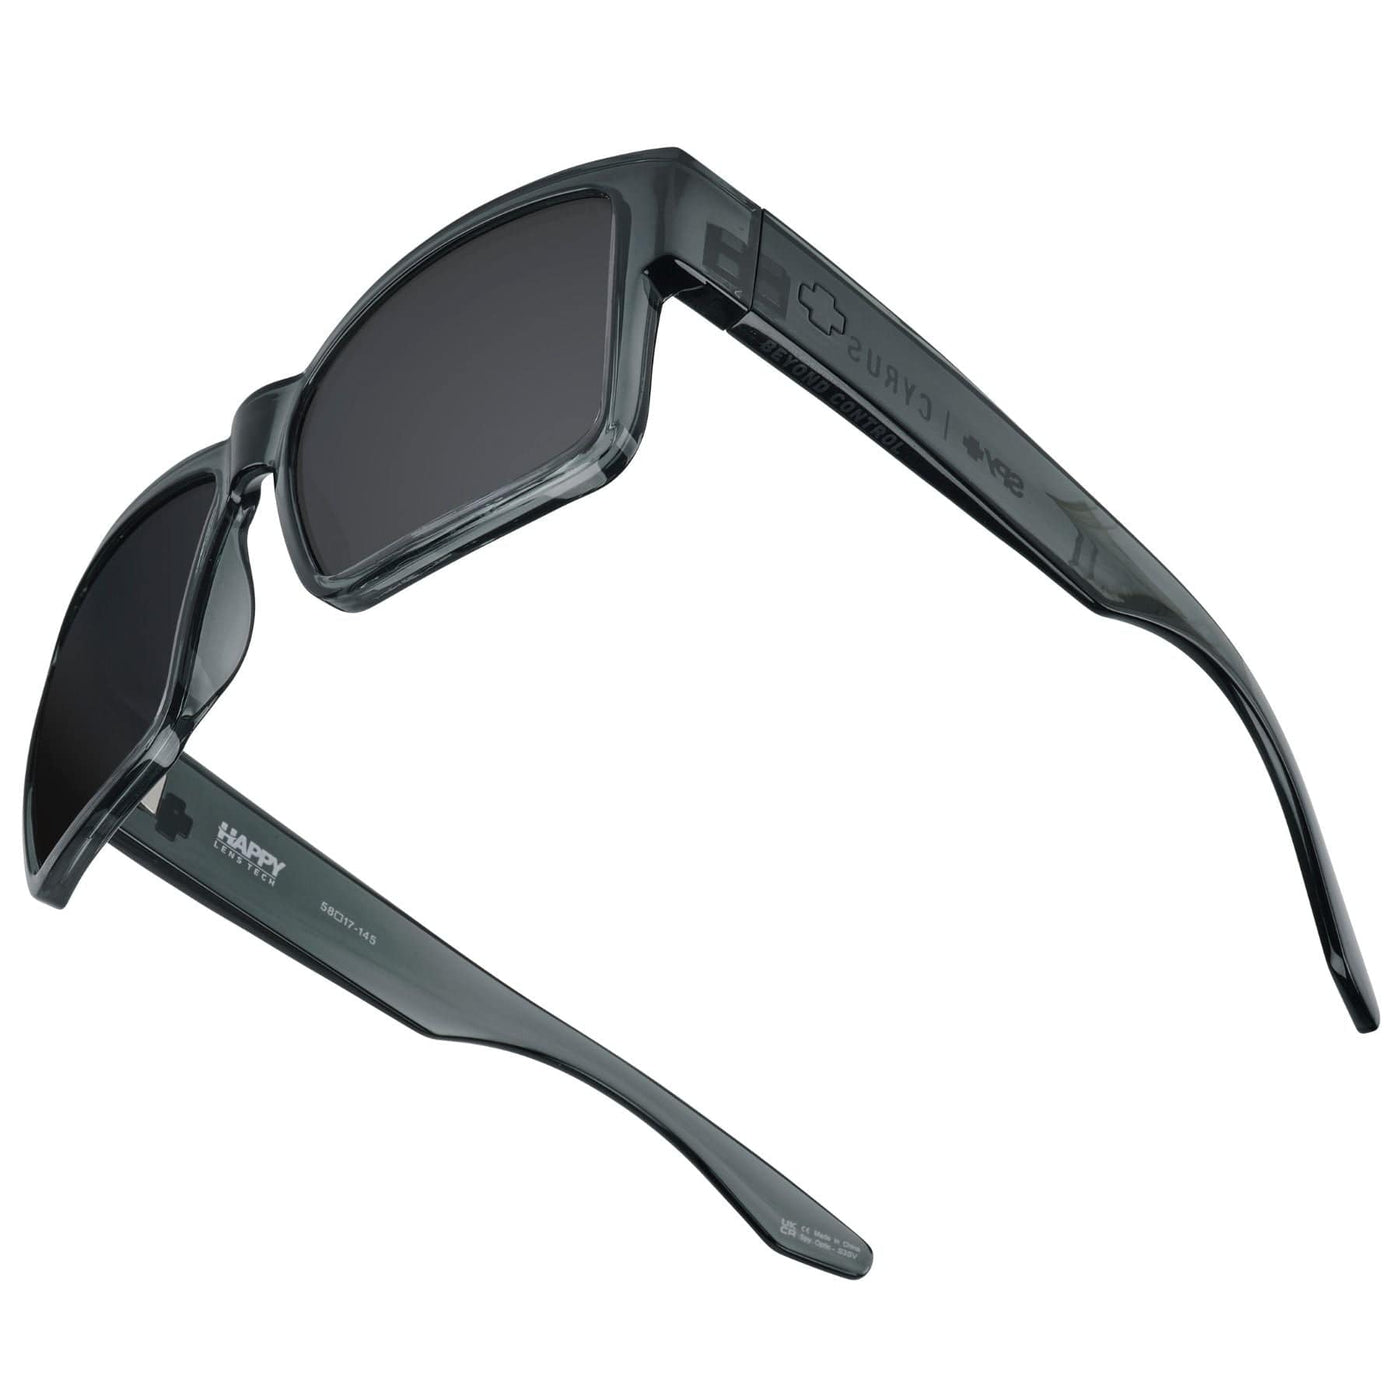 SPY CYRUS Sunglasses, Happy Lens - Gray 8Lines Shop - Fast Shipping